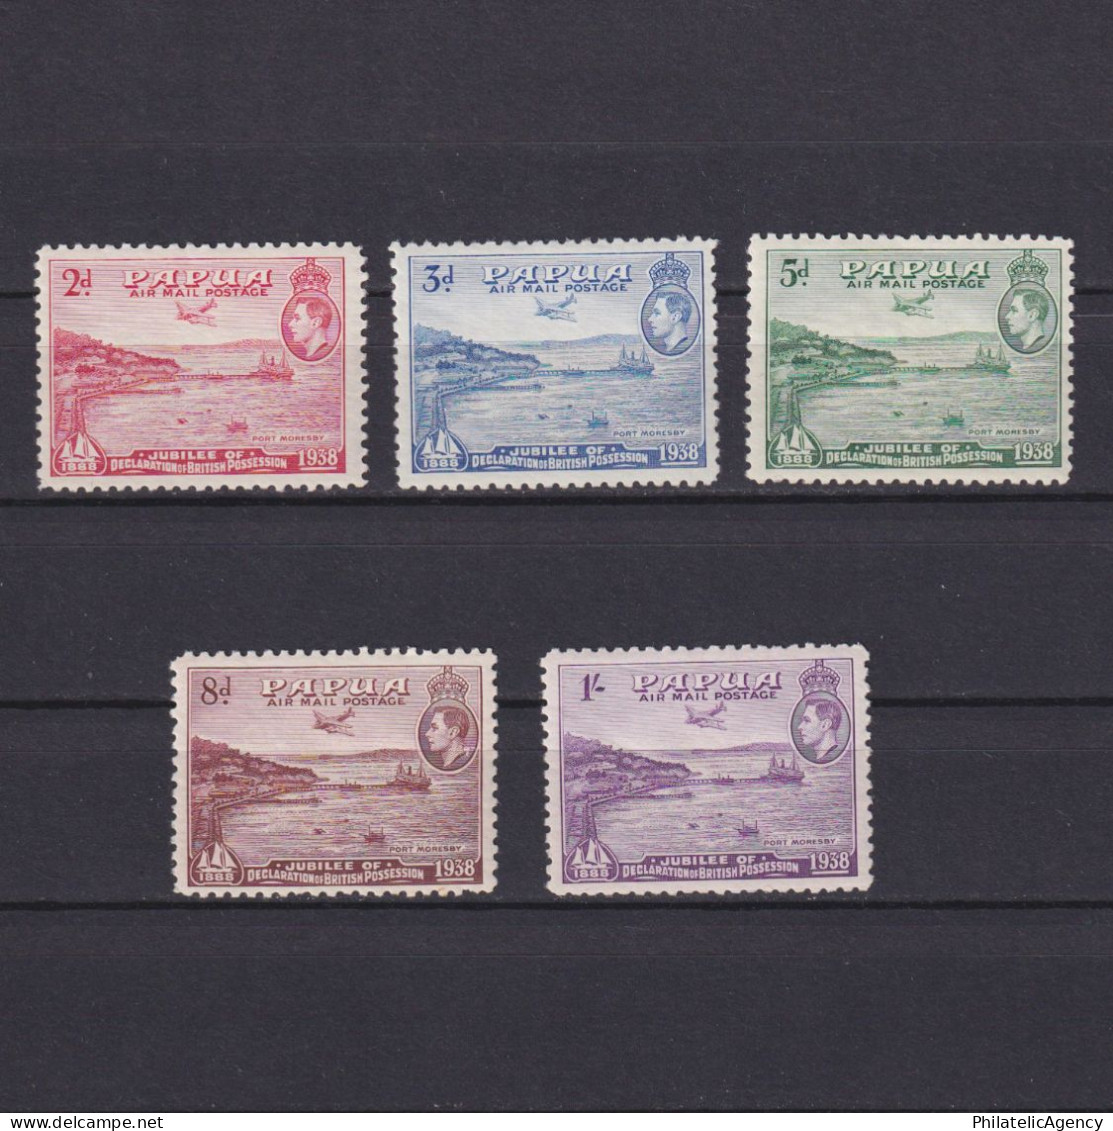 PAPUA 1938, SG #158-162, CV £35, MH - Papúa Nueva Guinea